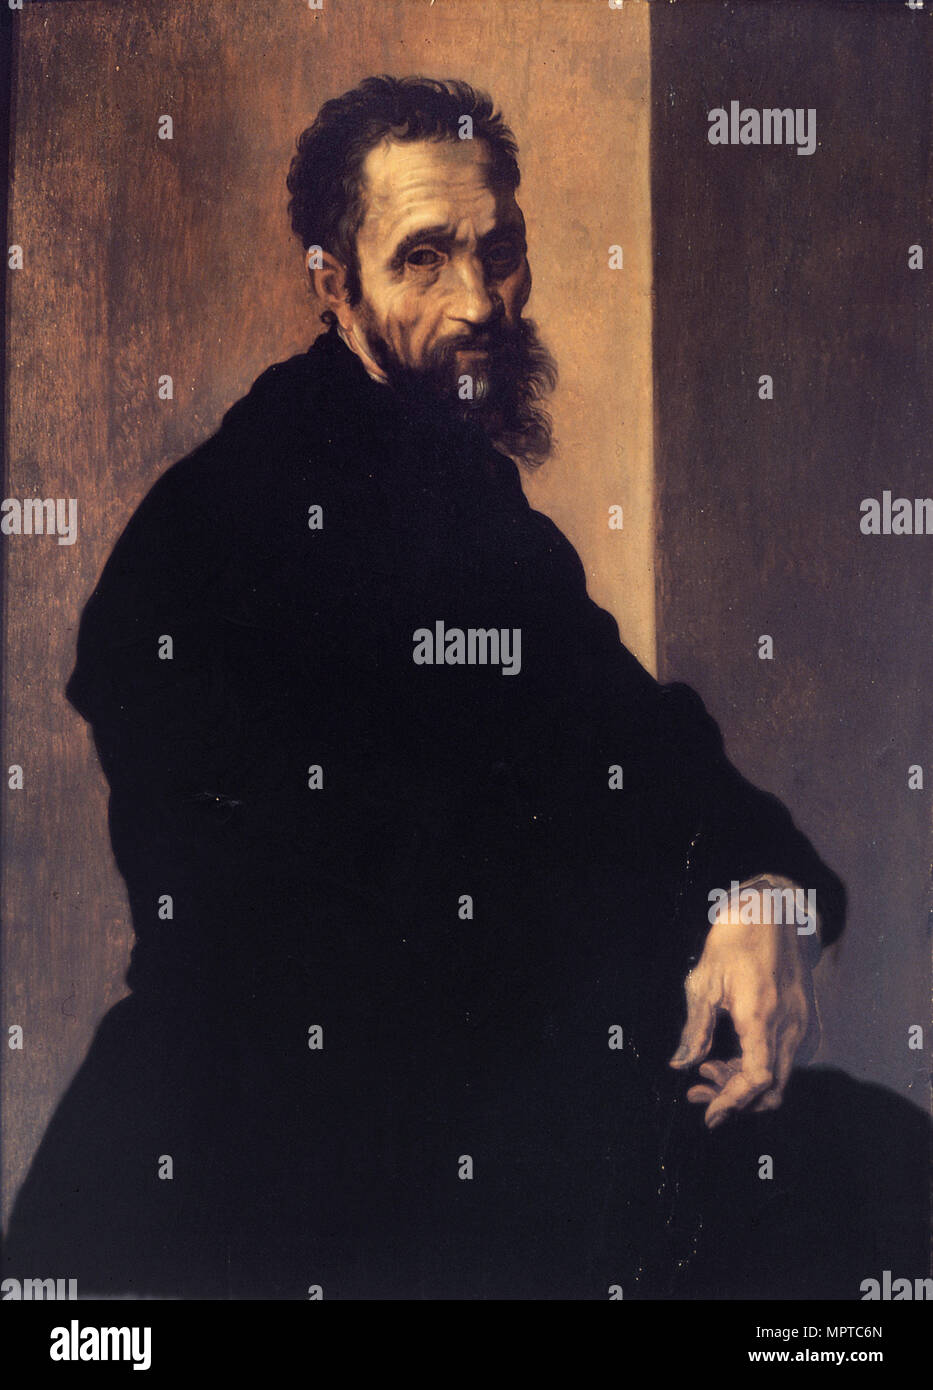 Portrait of Michelangelo Buonarroti. Stock Photo